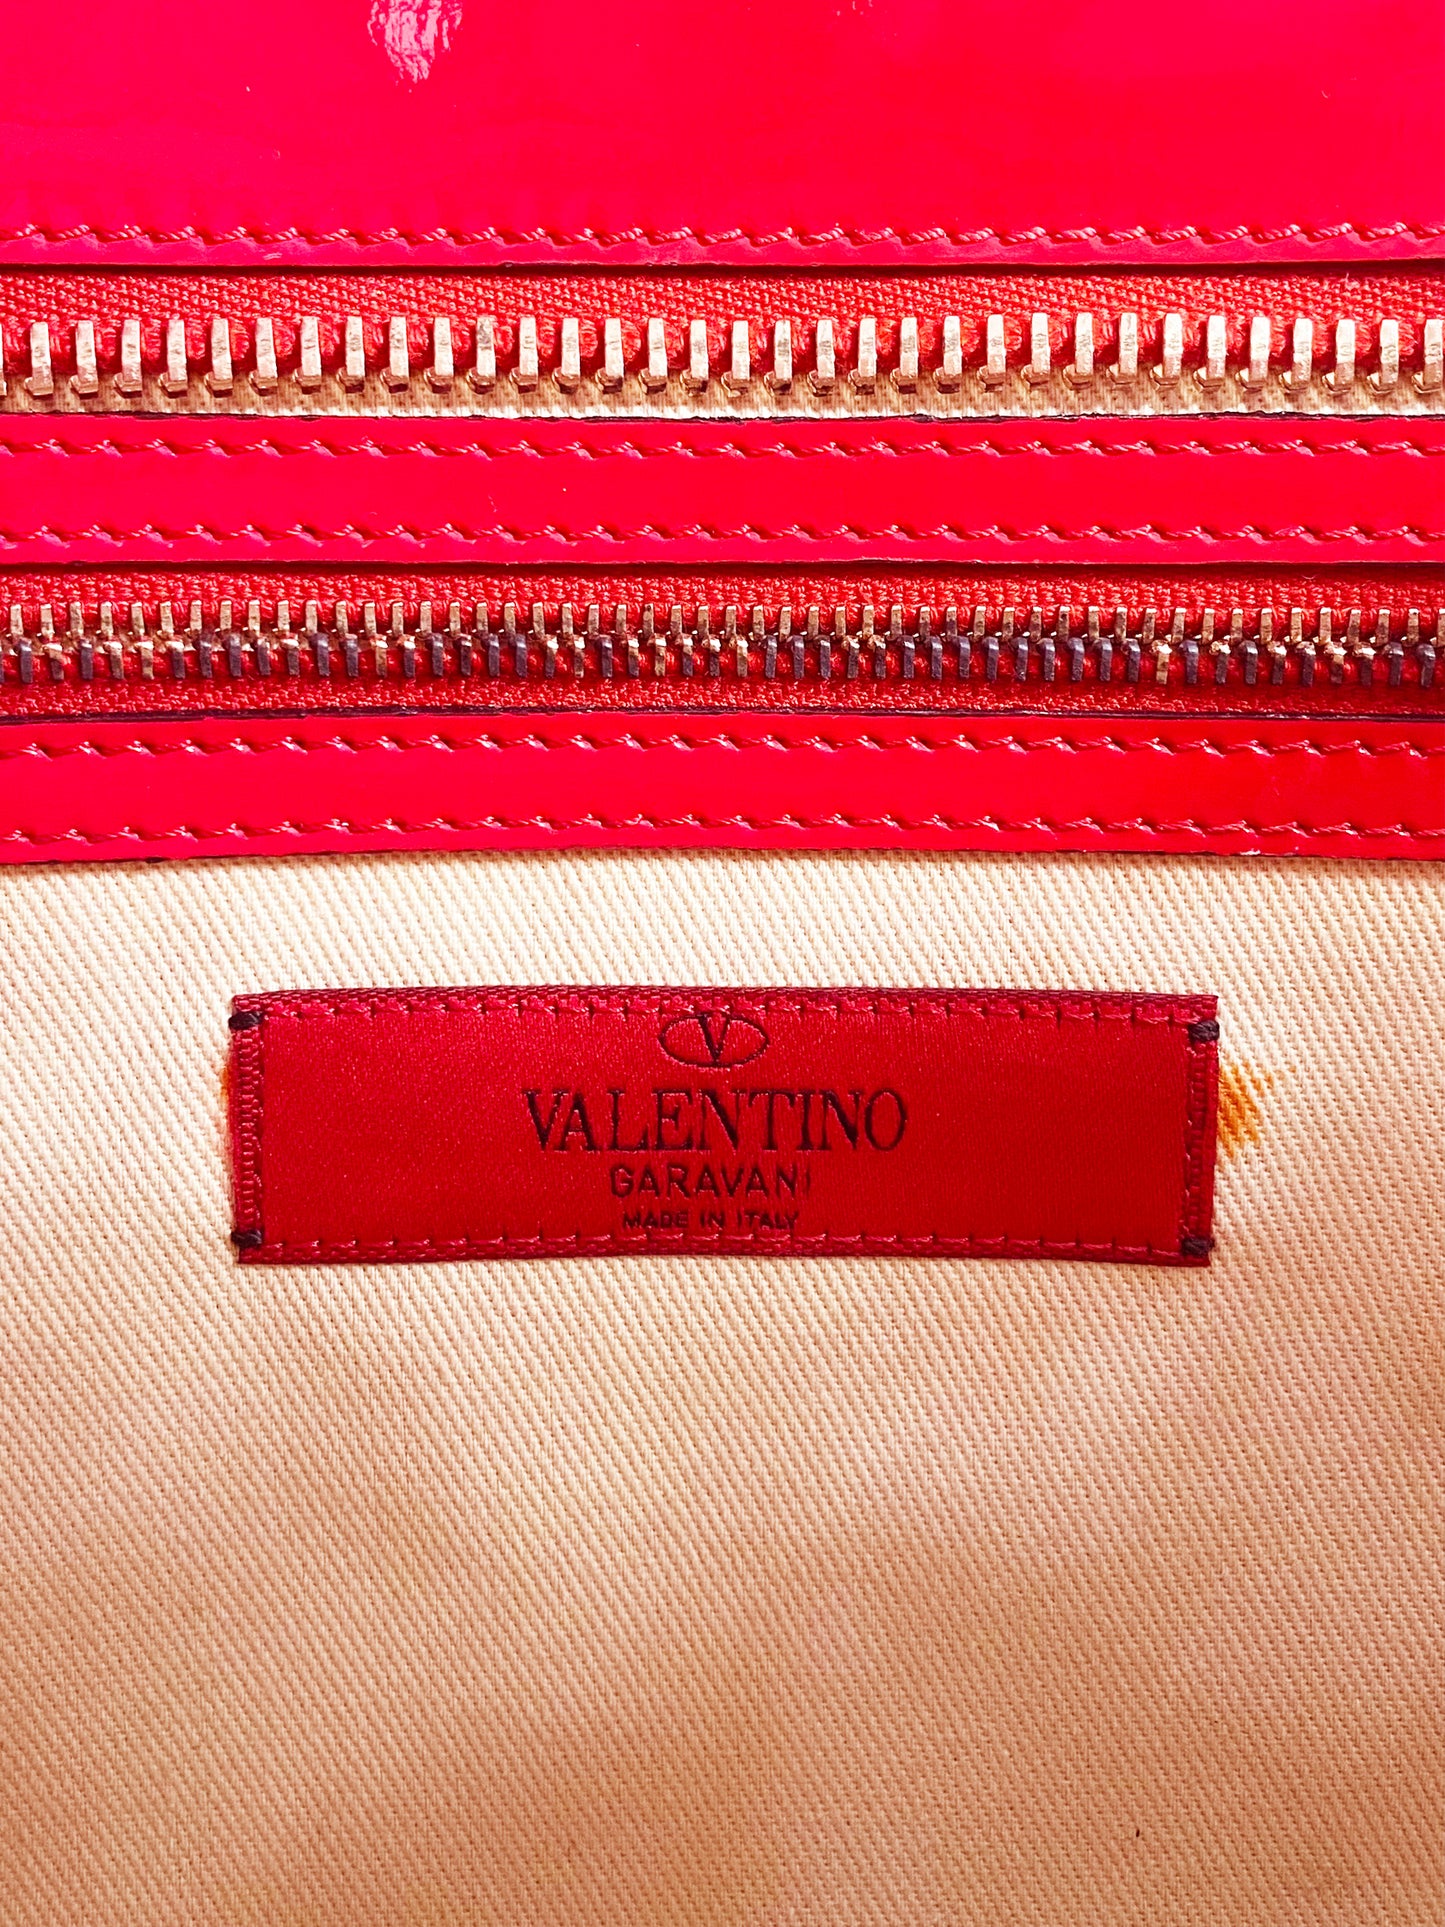 Valentino Patent Leather Rockstud